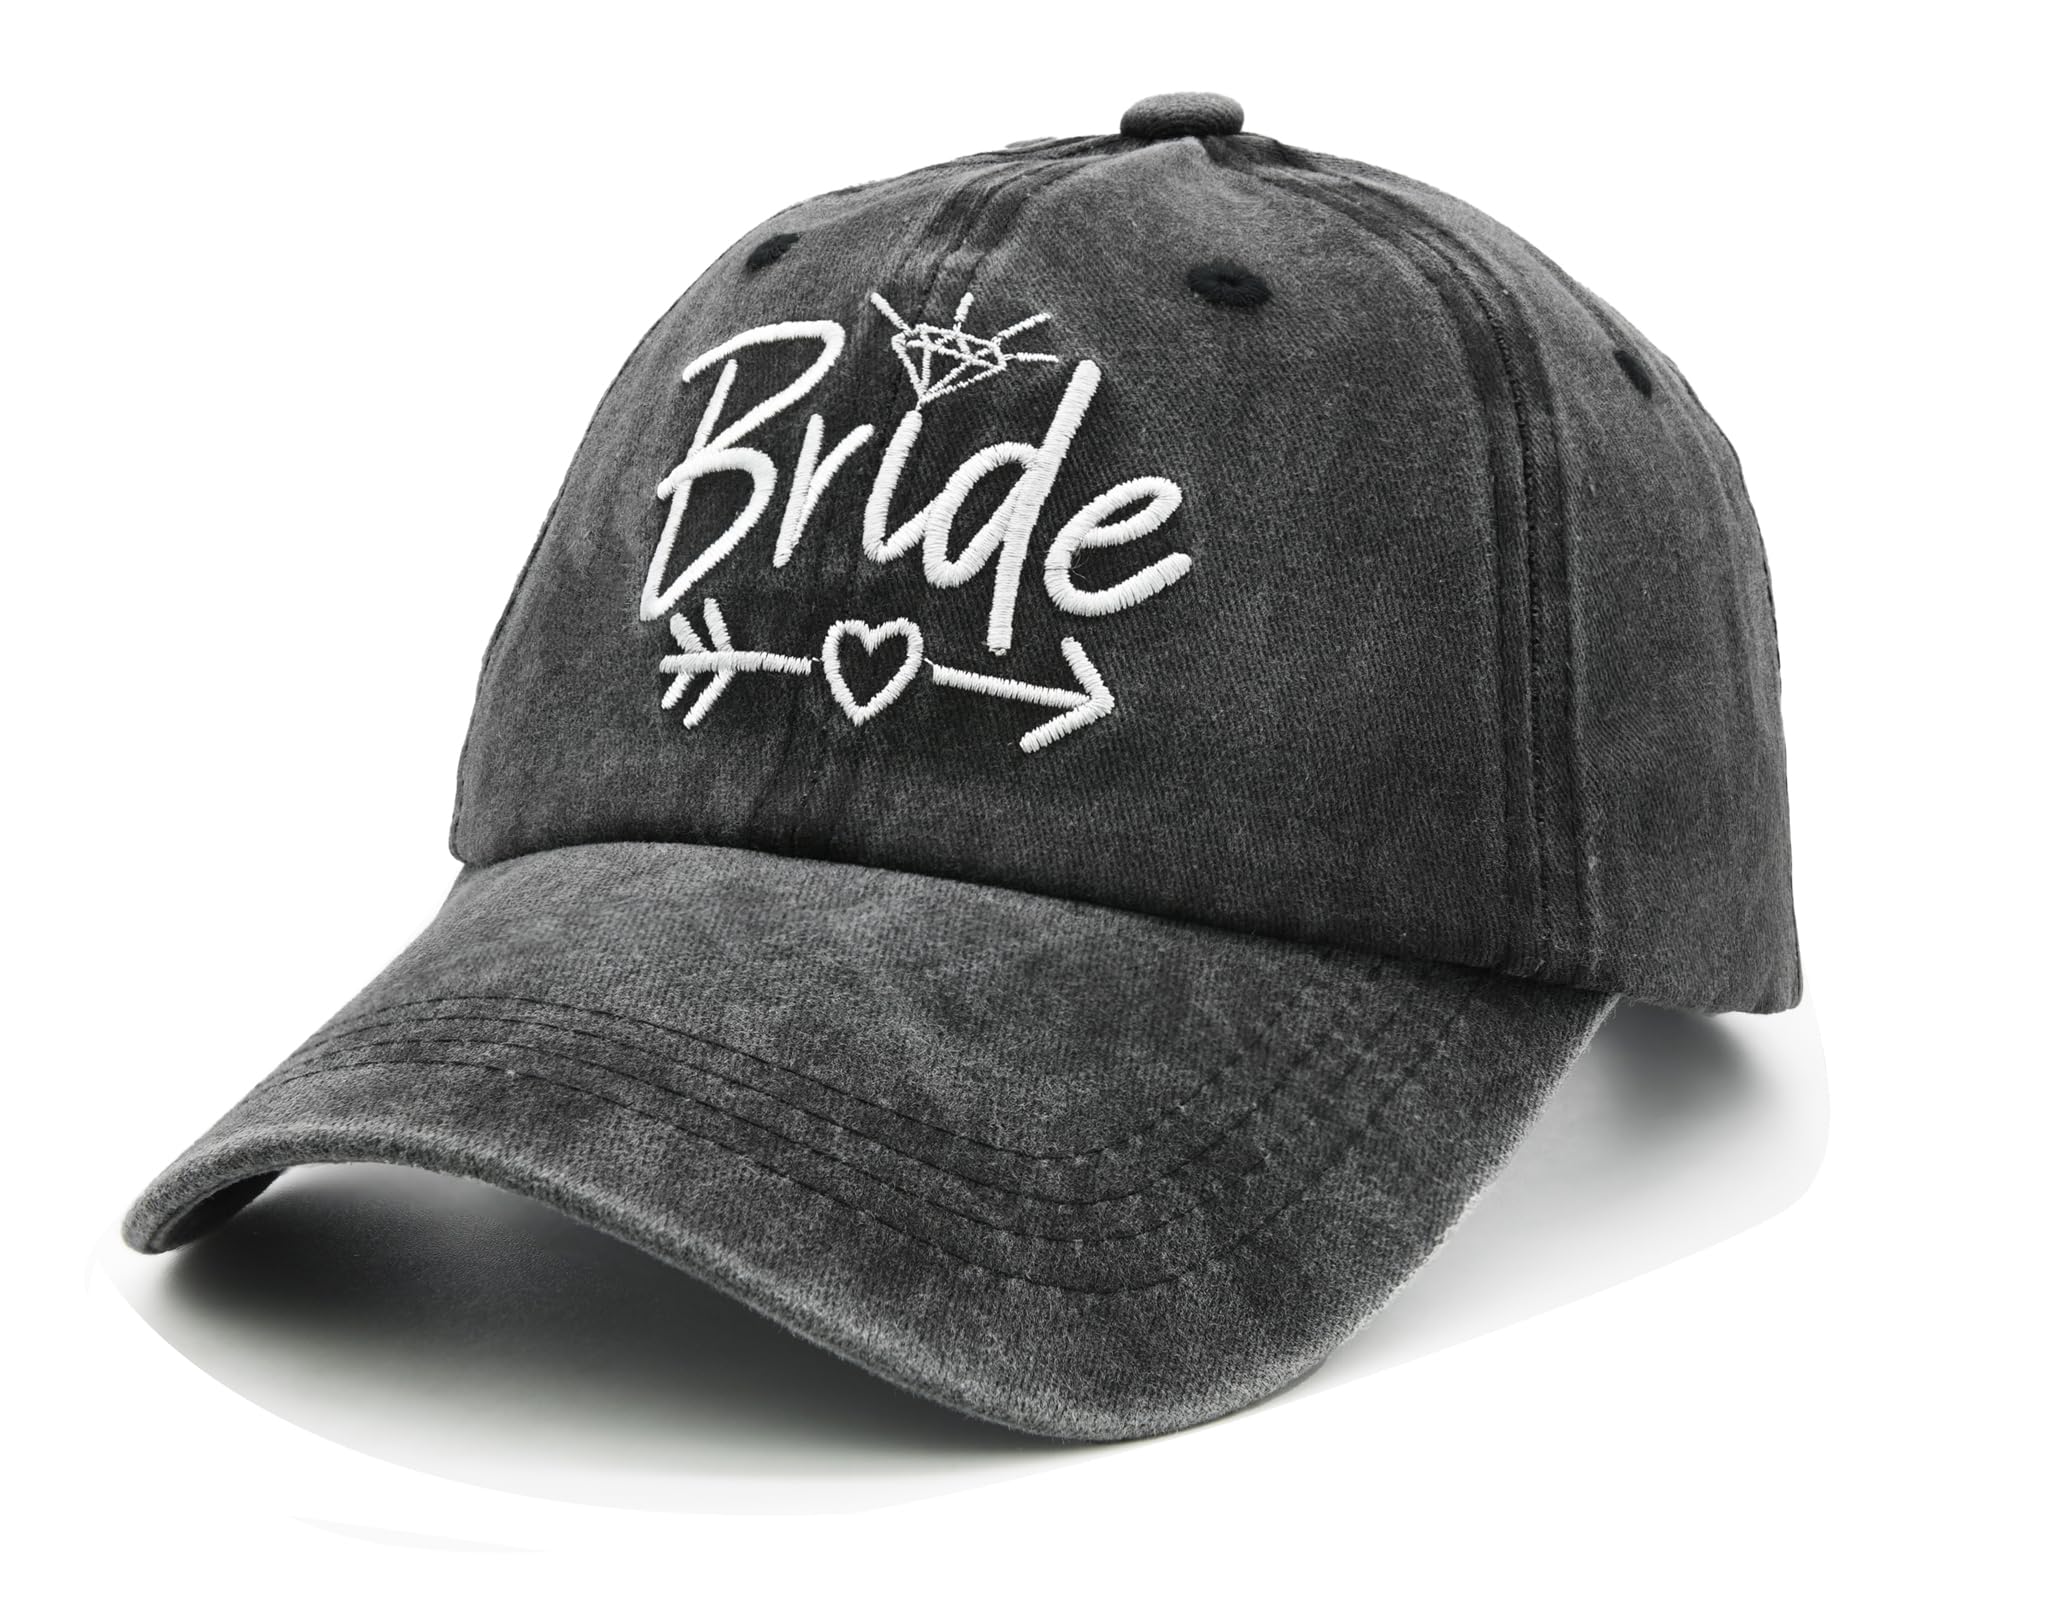 LOKIDVE Bride Baseball Cap Embroidered Washed Cotton Denim Hat for Wedding Party Black